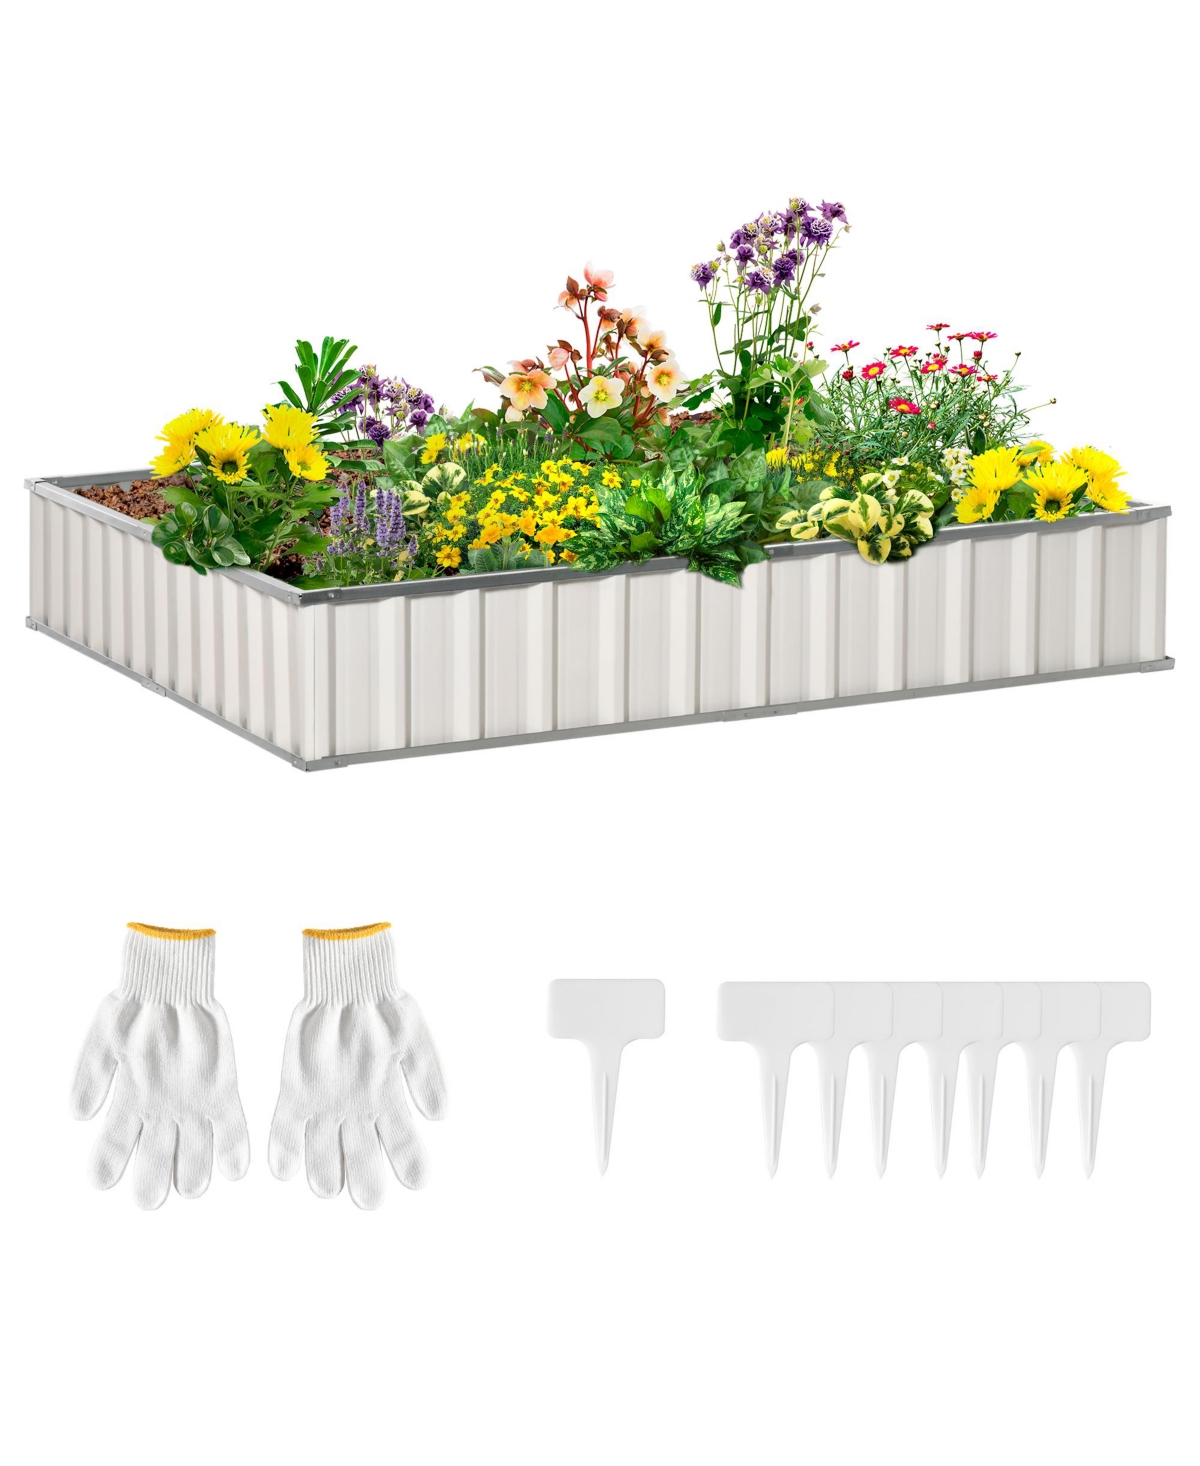 Metal Raised Garden Bed No Bottom Large Steel Planter Box w/ Gloves - White